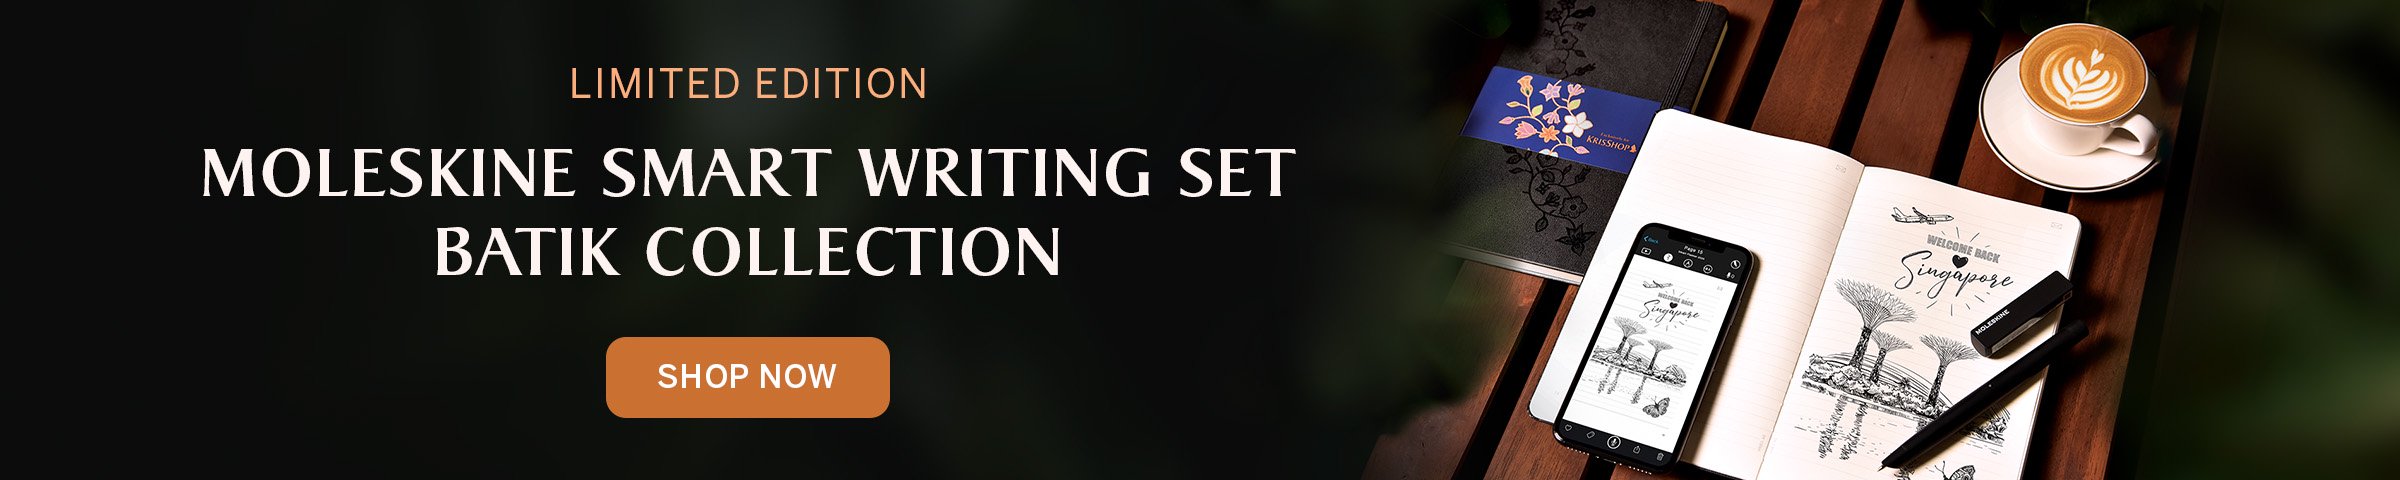 Moleskine Smart Writing Set Batik Collection